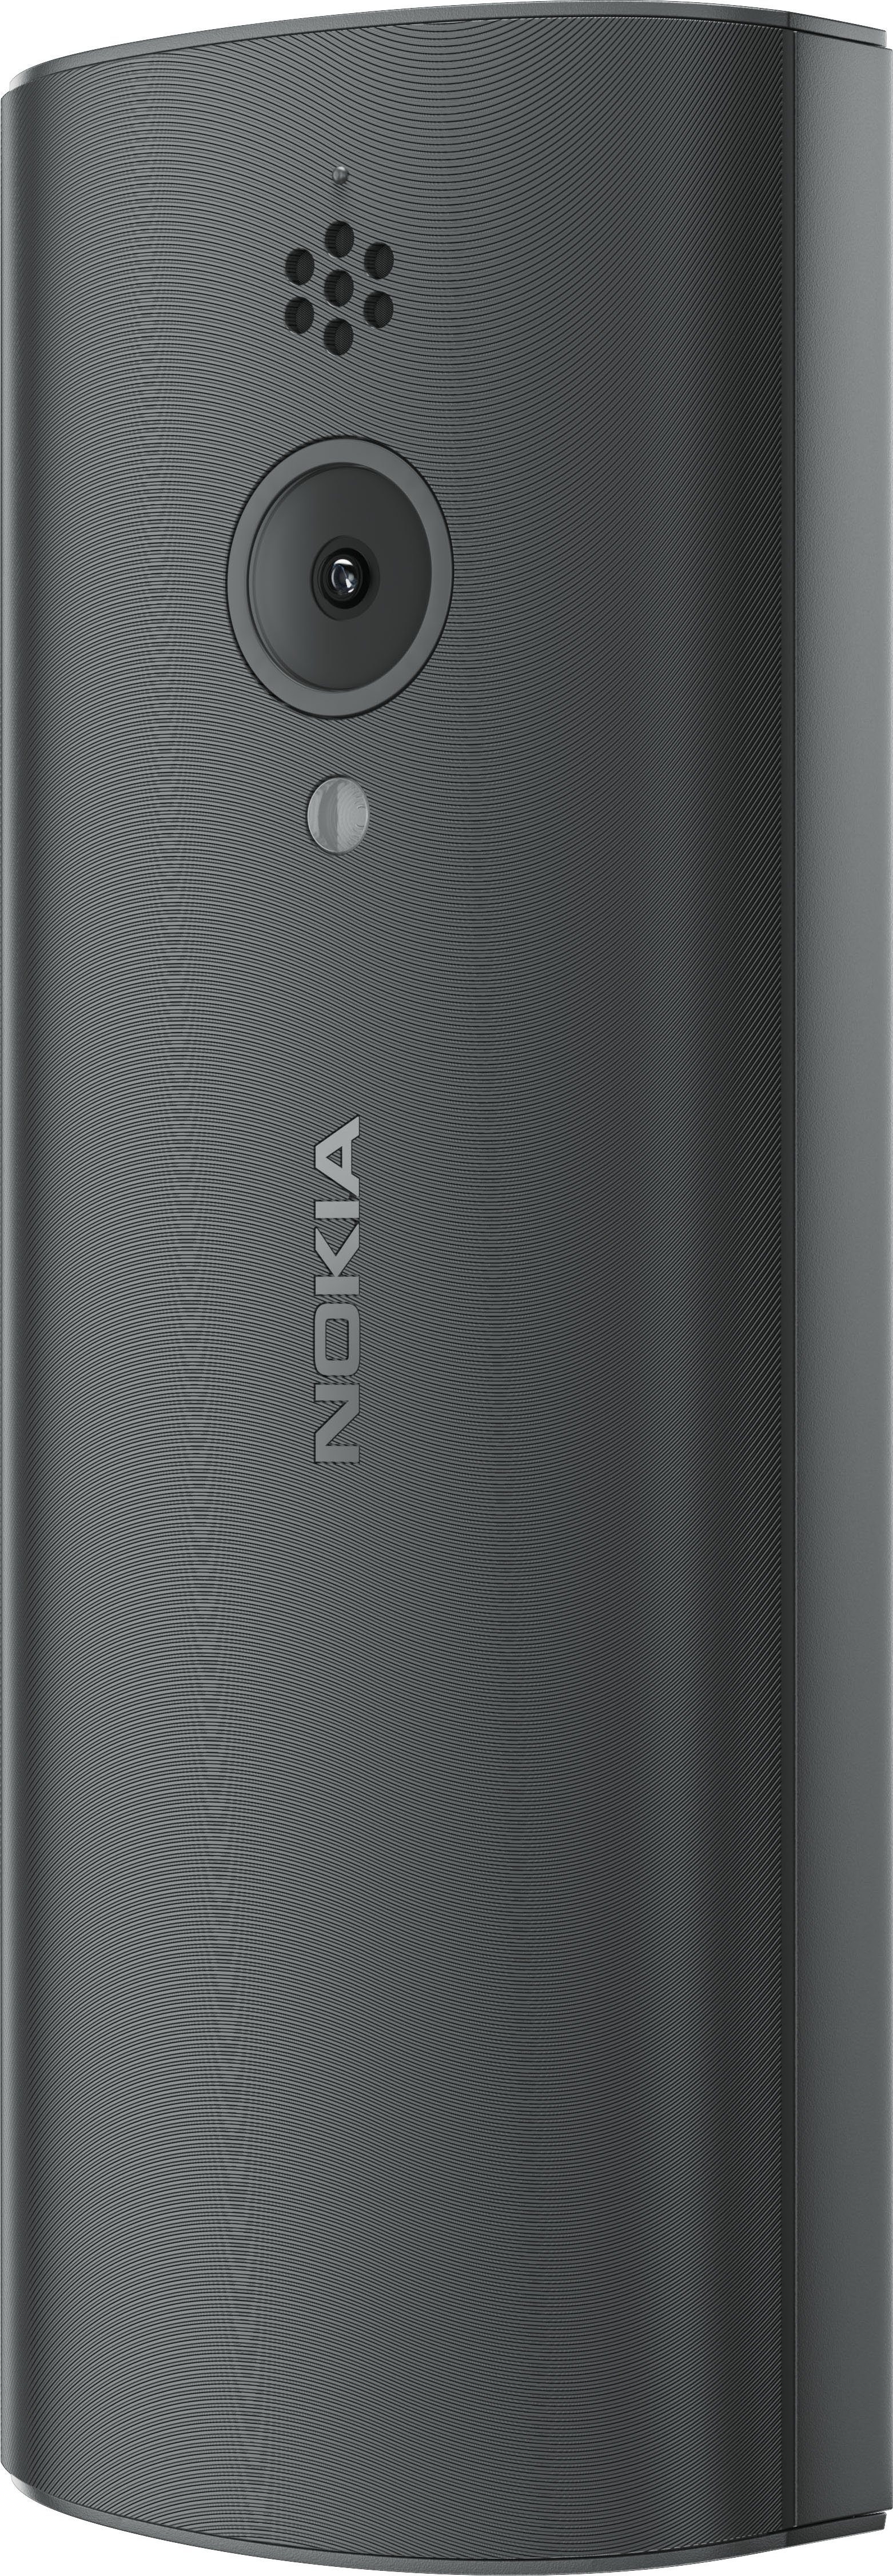 Nokia 150 Handy Edition 2023 (6,09 Zoll) cm/2,4 2G